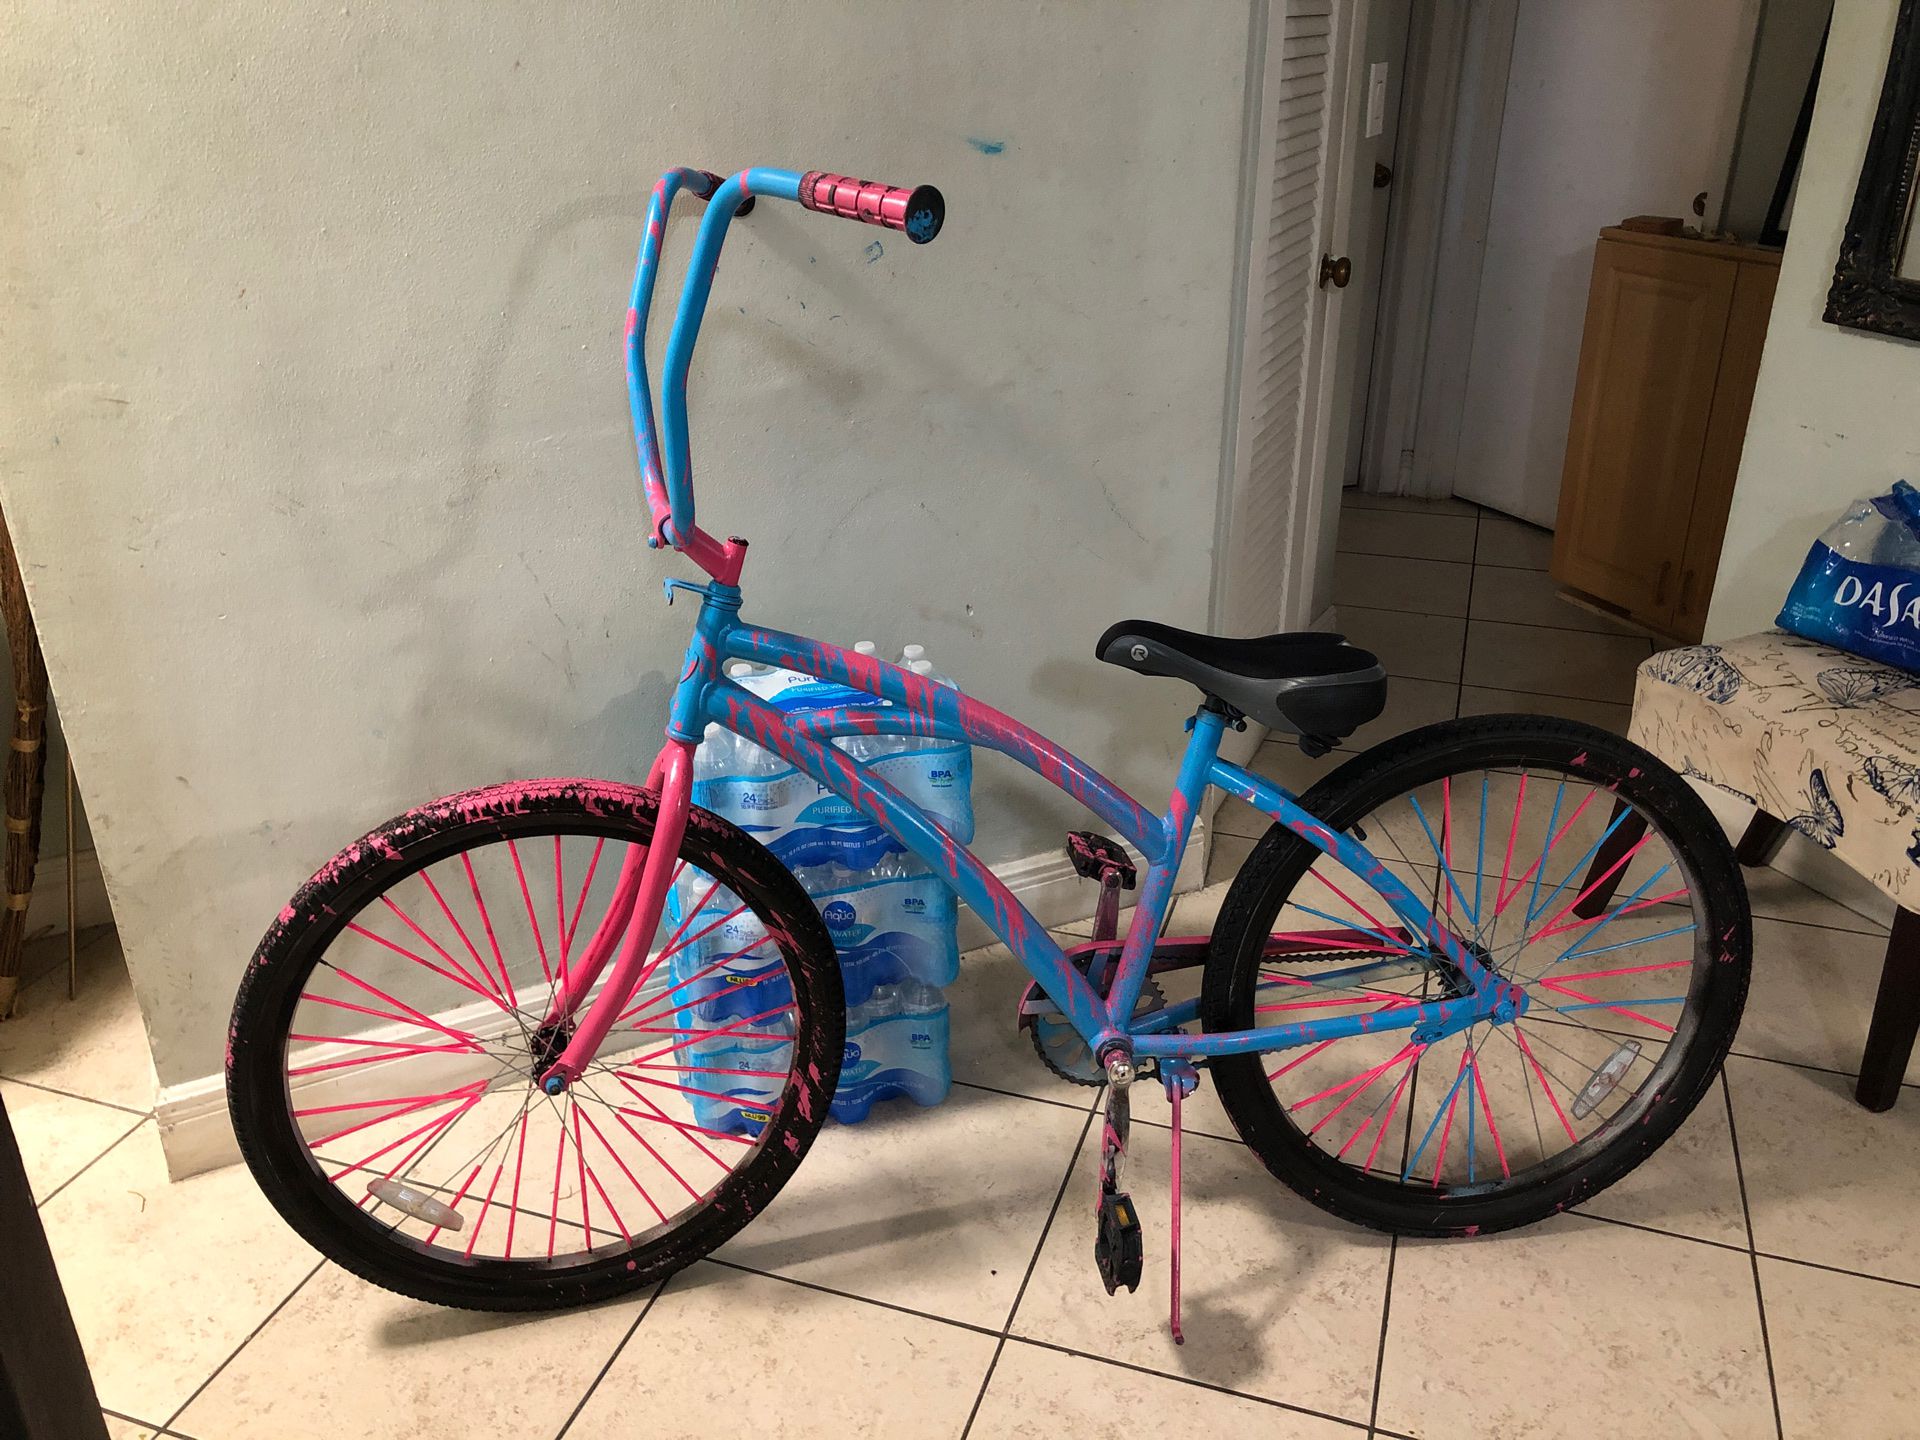 Miami vice lowrider/ cruiser bike